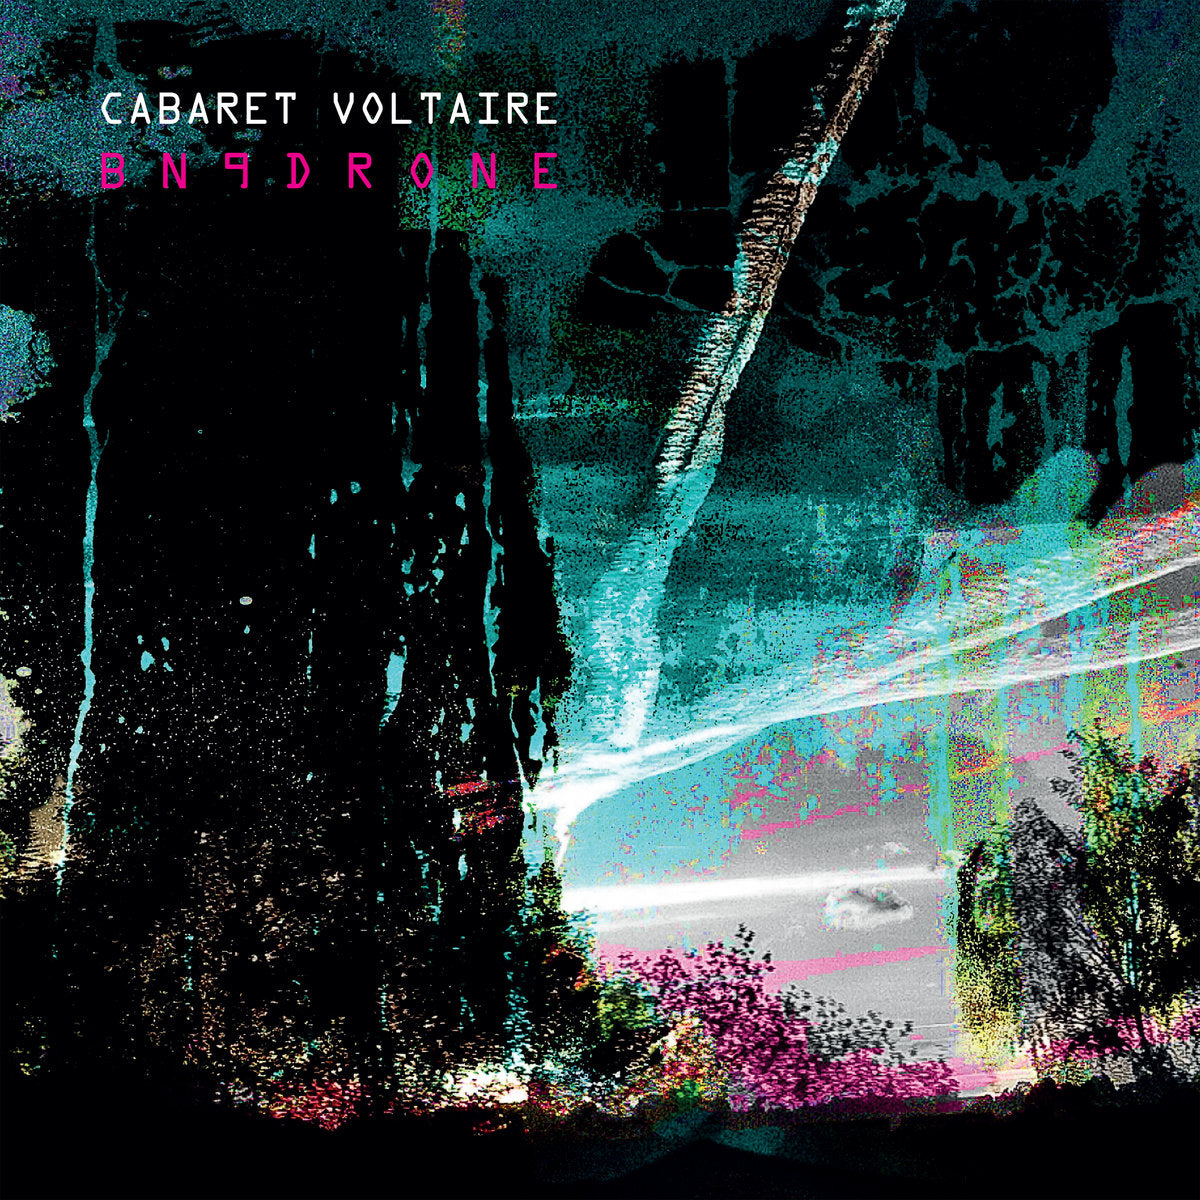 CABARET VOLTAIRE - BN9Drone - 2LP - White Vinyl